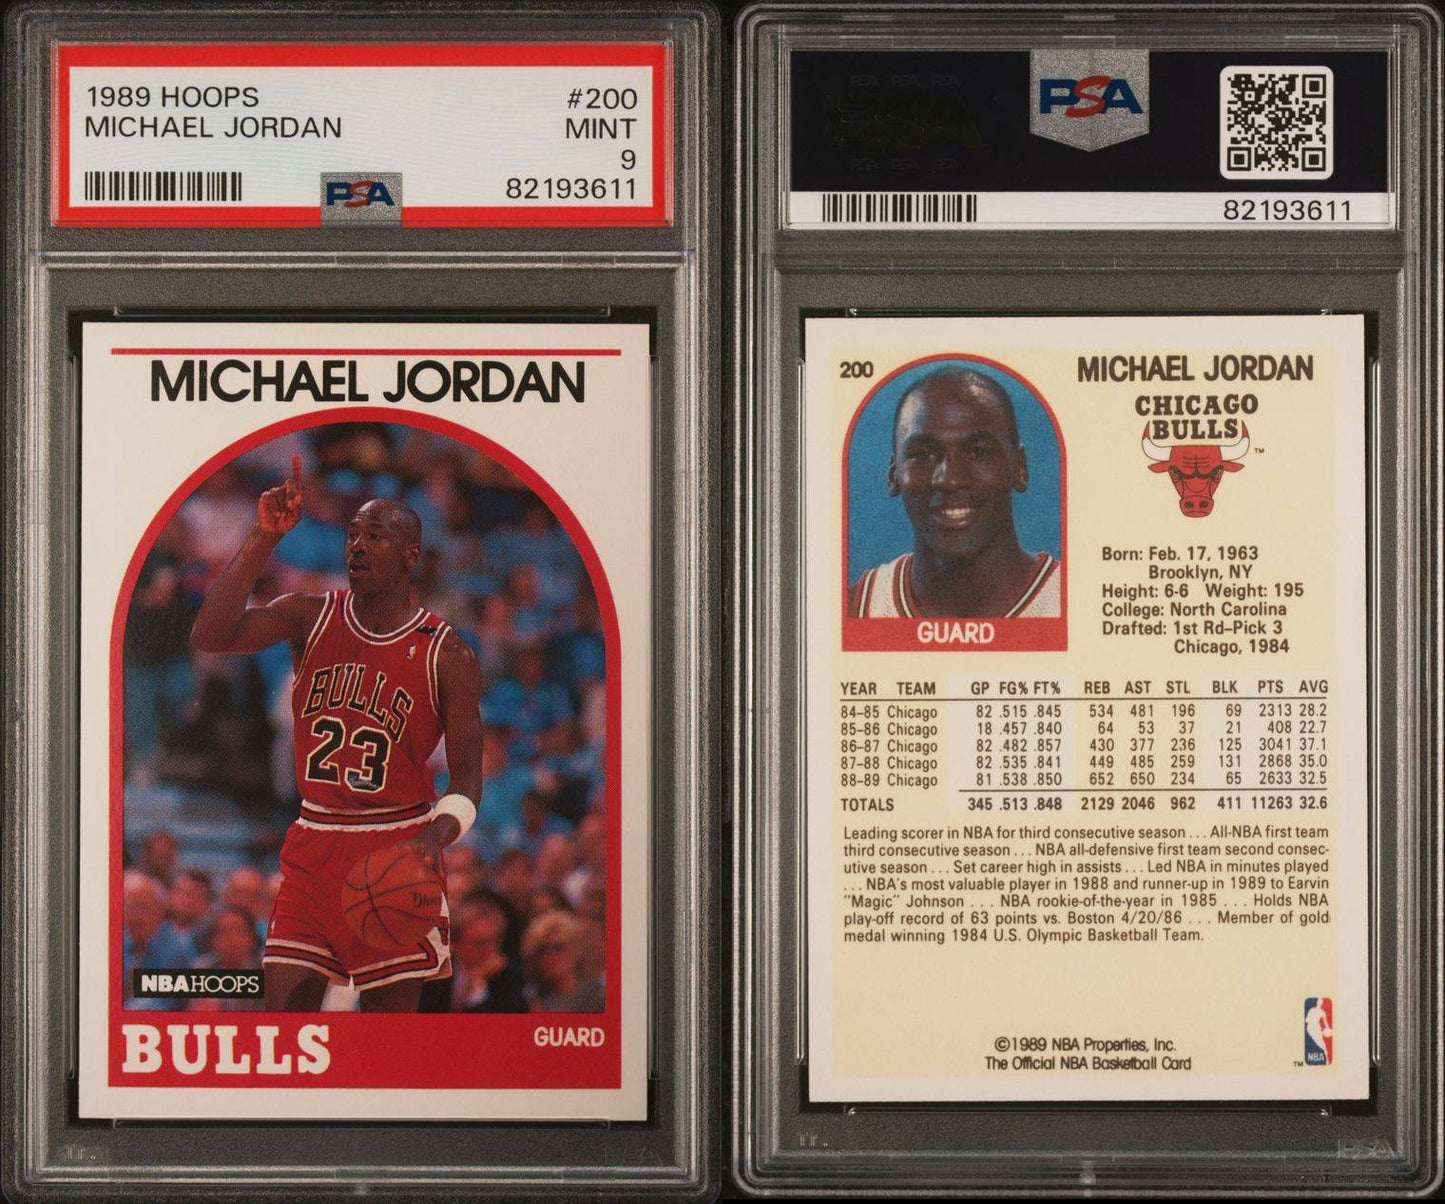 1989 Hoops #200 Michael Jordan PSA 9 Mint